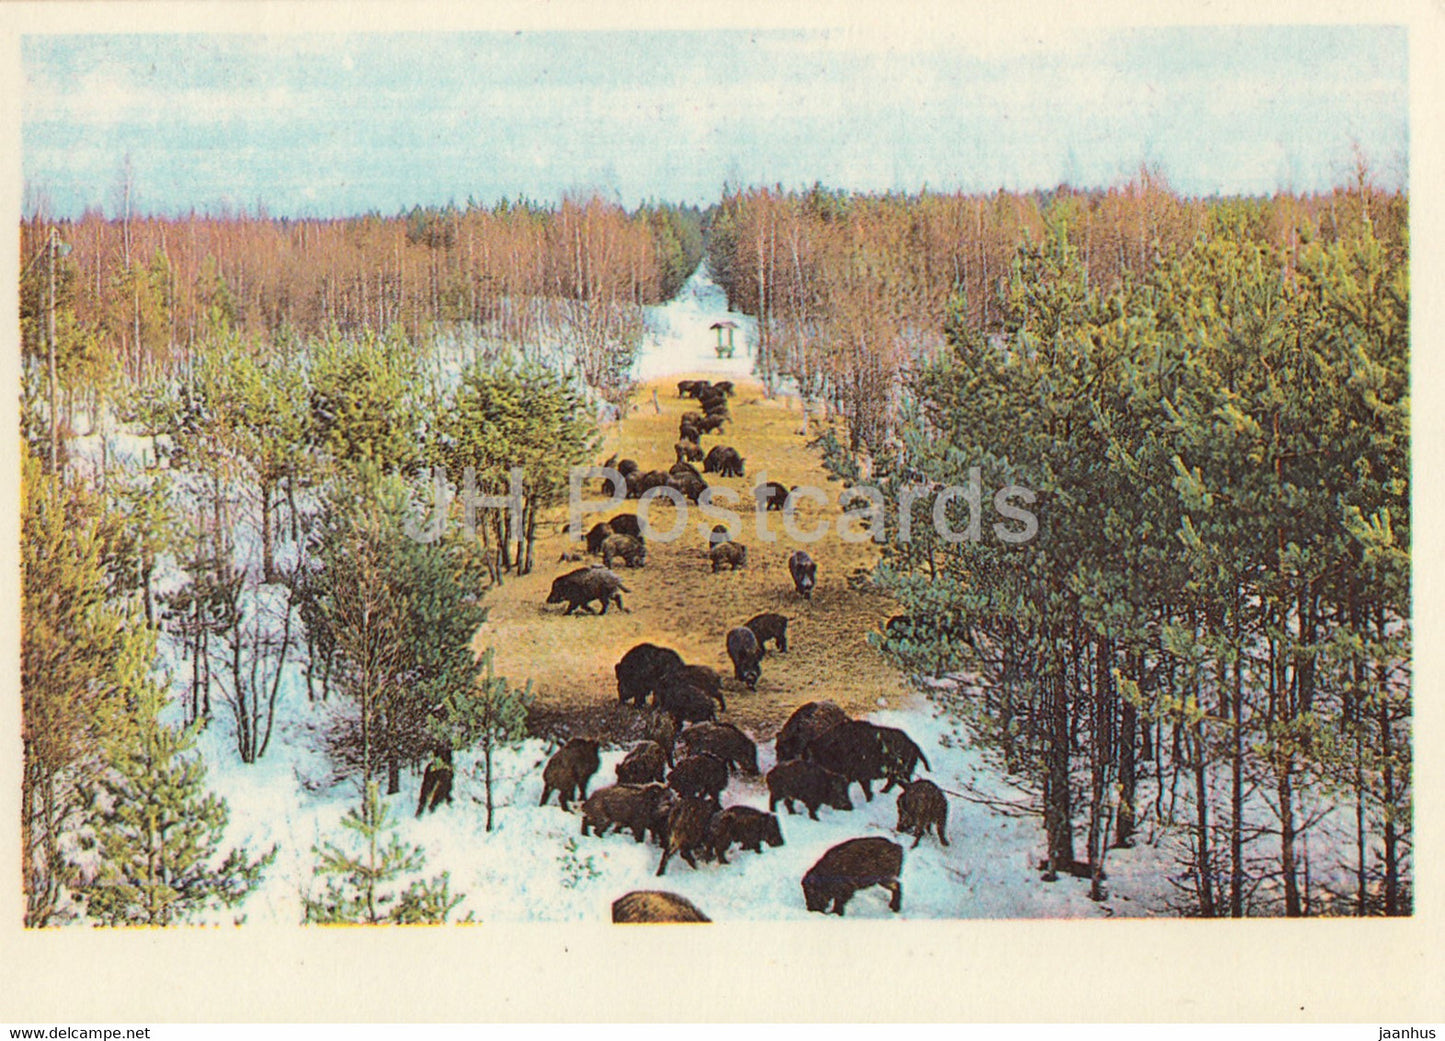 Wild boar - Sus scrofa - 1983 - Estonia USSR - unused - JH Postcards